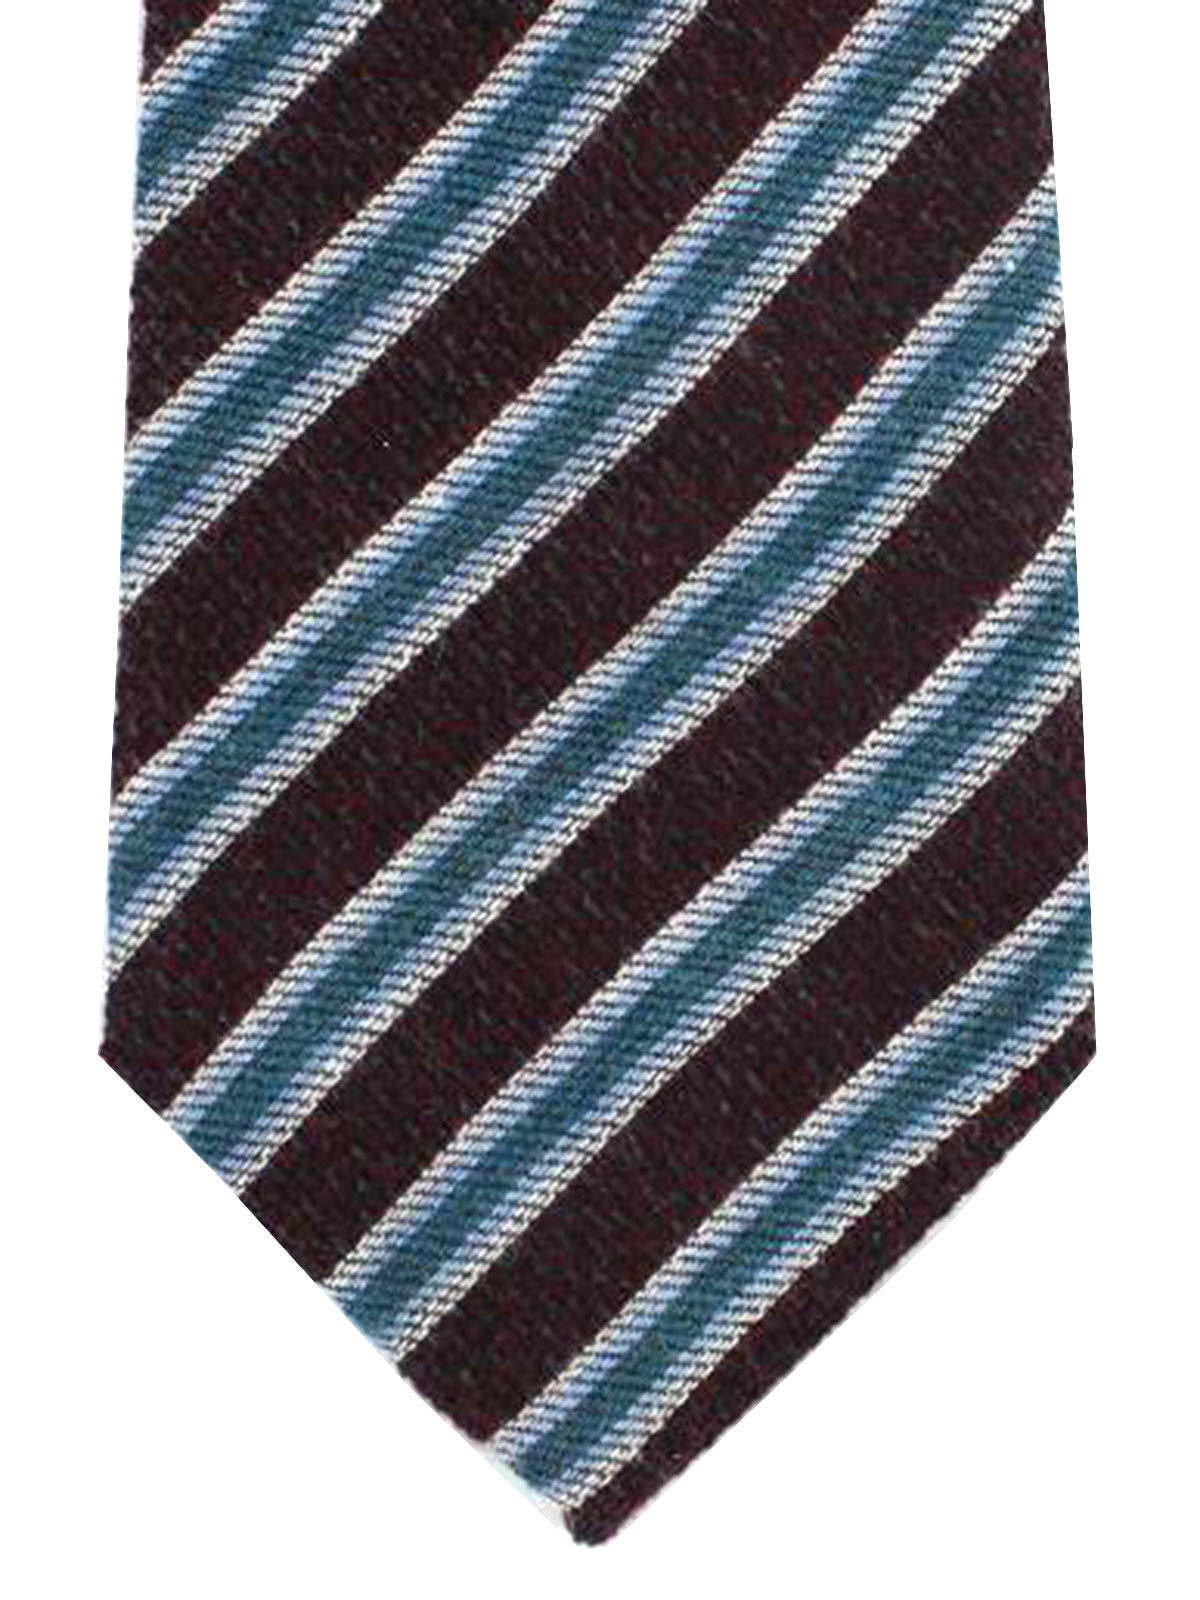 Kenzo Tie Maroon Teal Stripes - Narrow Necktie